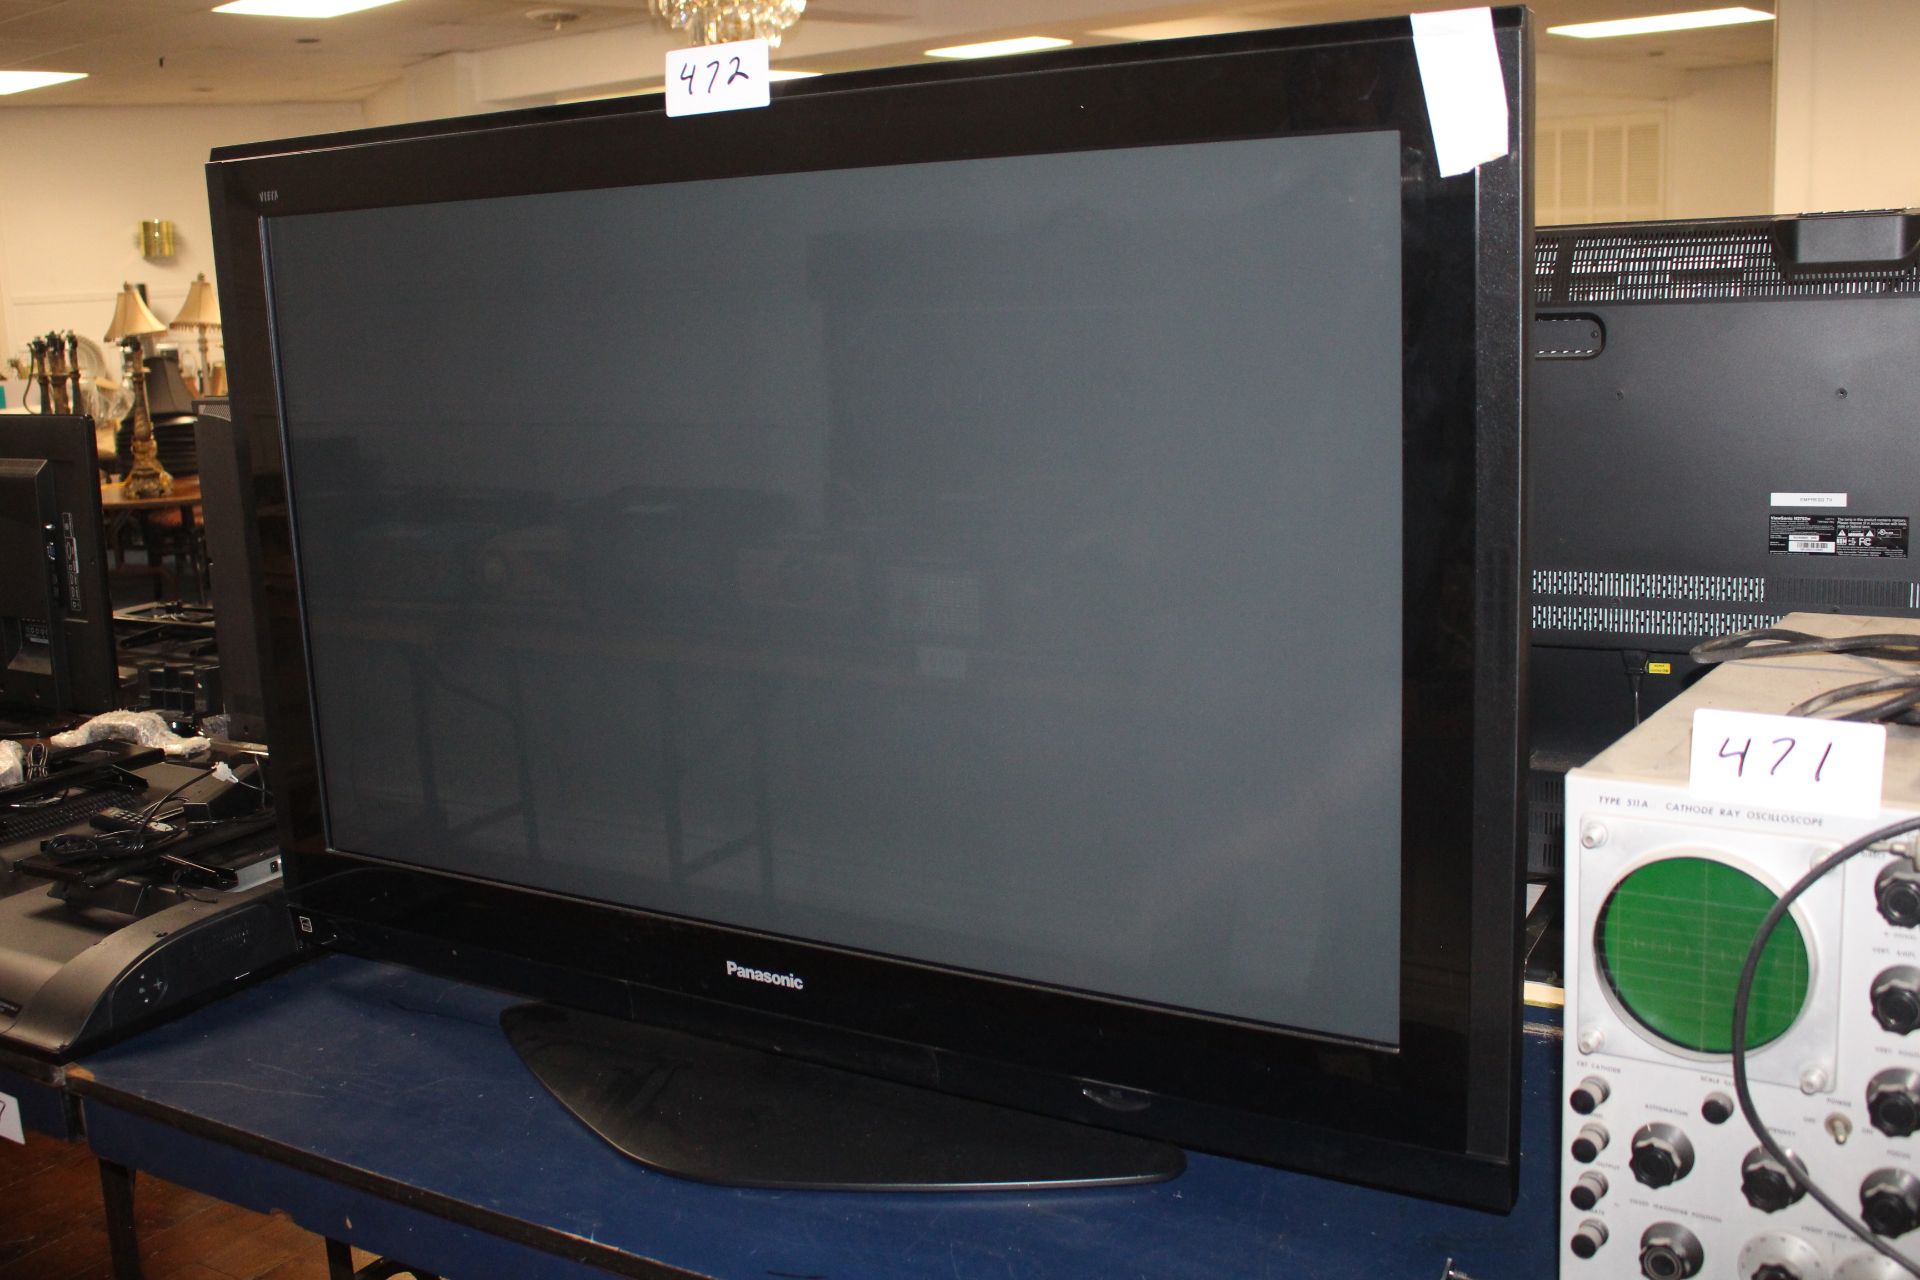 Panasonic HD Plasma TV model TH-50Pz700U